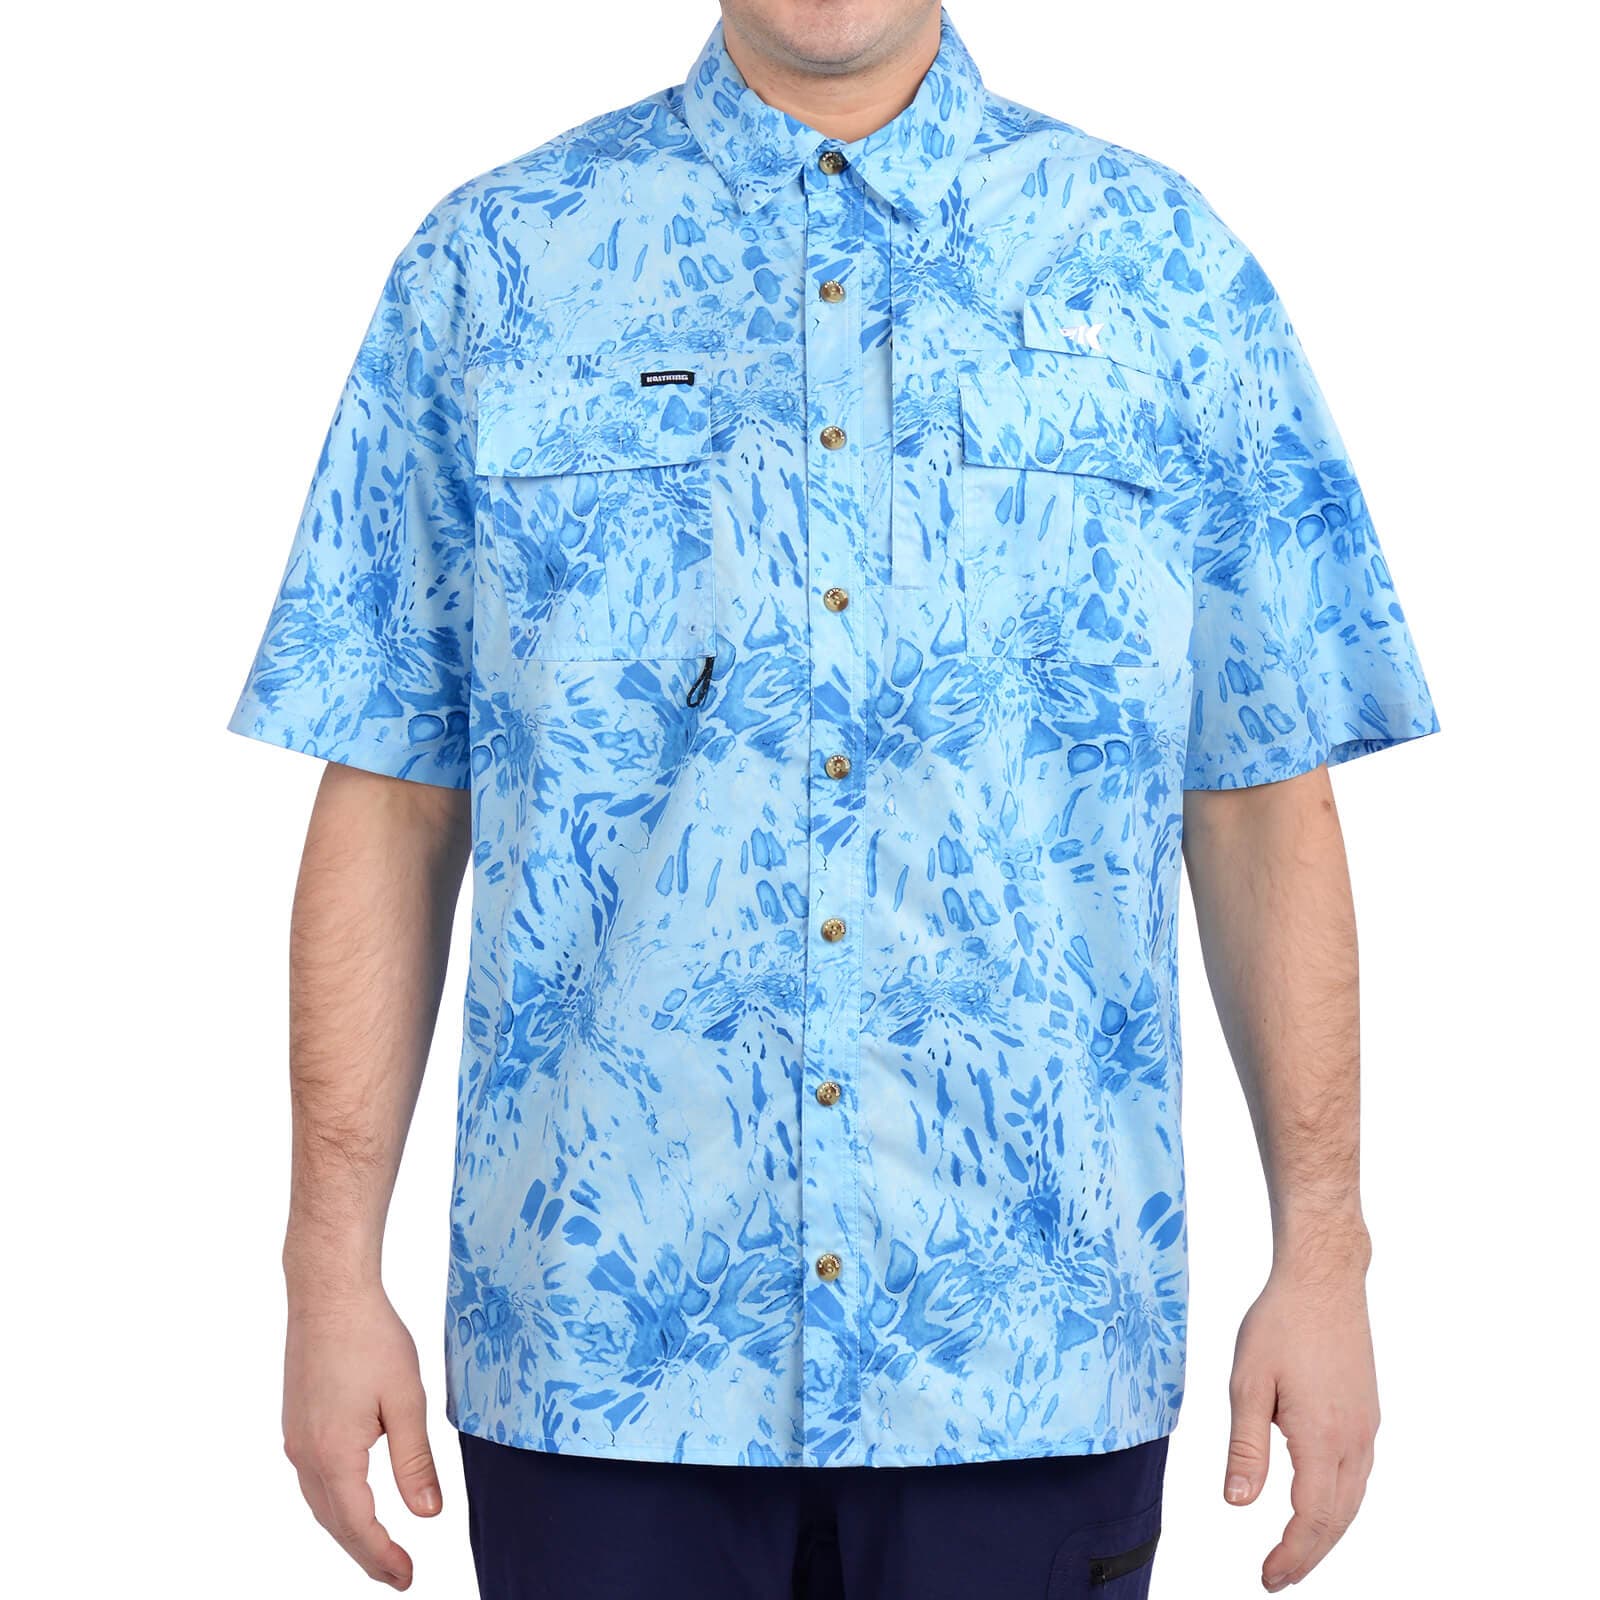 KastKing Casual Short Sleeve Button Down Shirts - Prym1:seafoam / X-Small